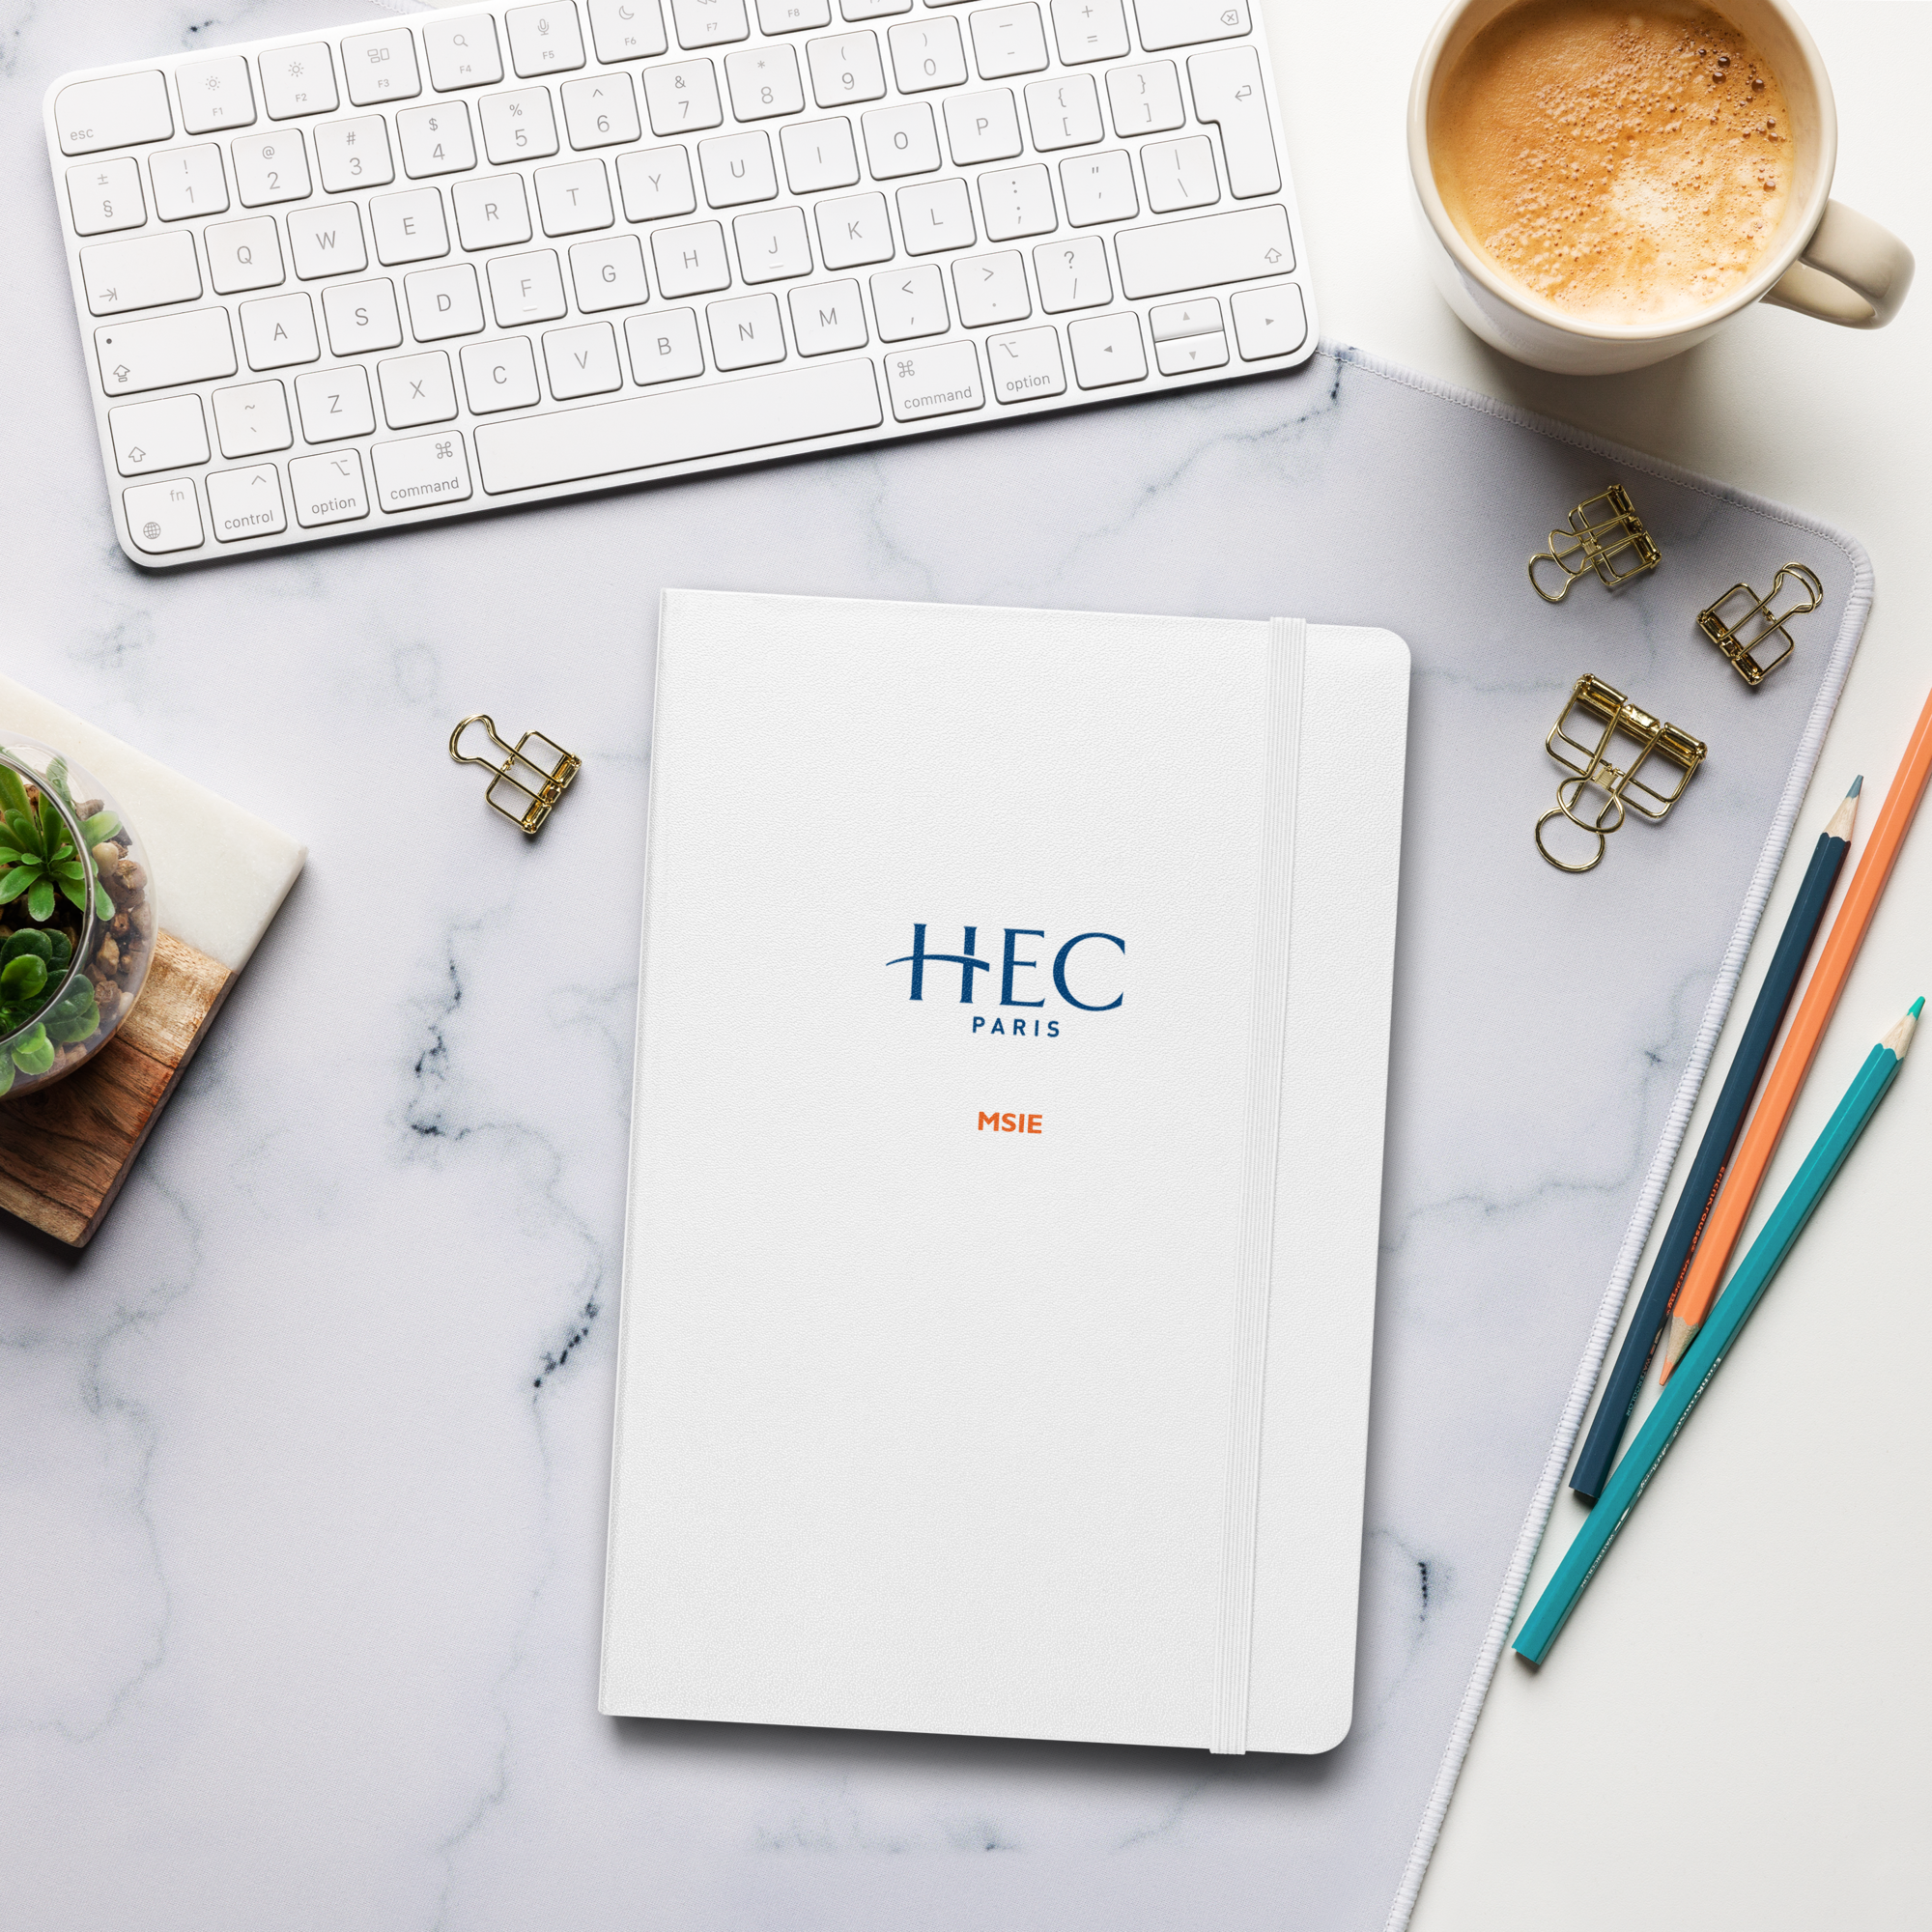 HEC Paris MSIE Hardcover Bound Notebook